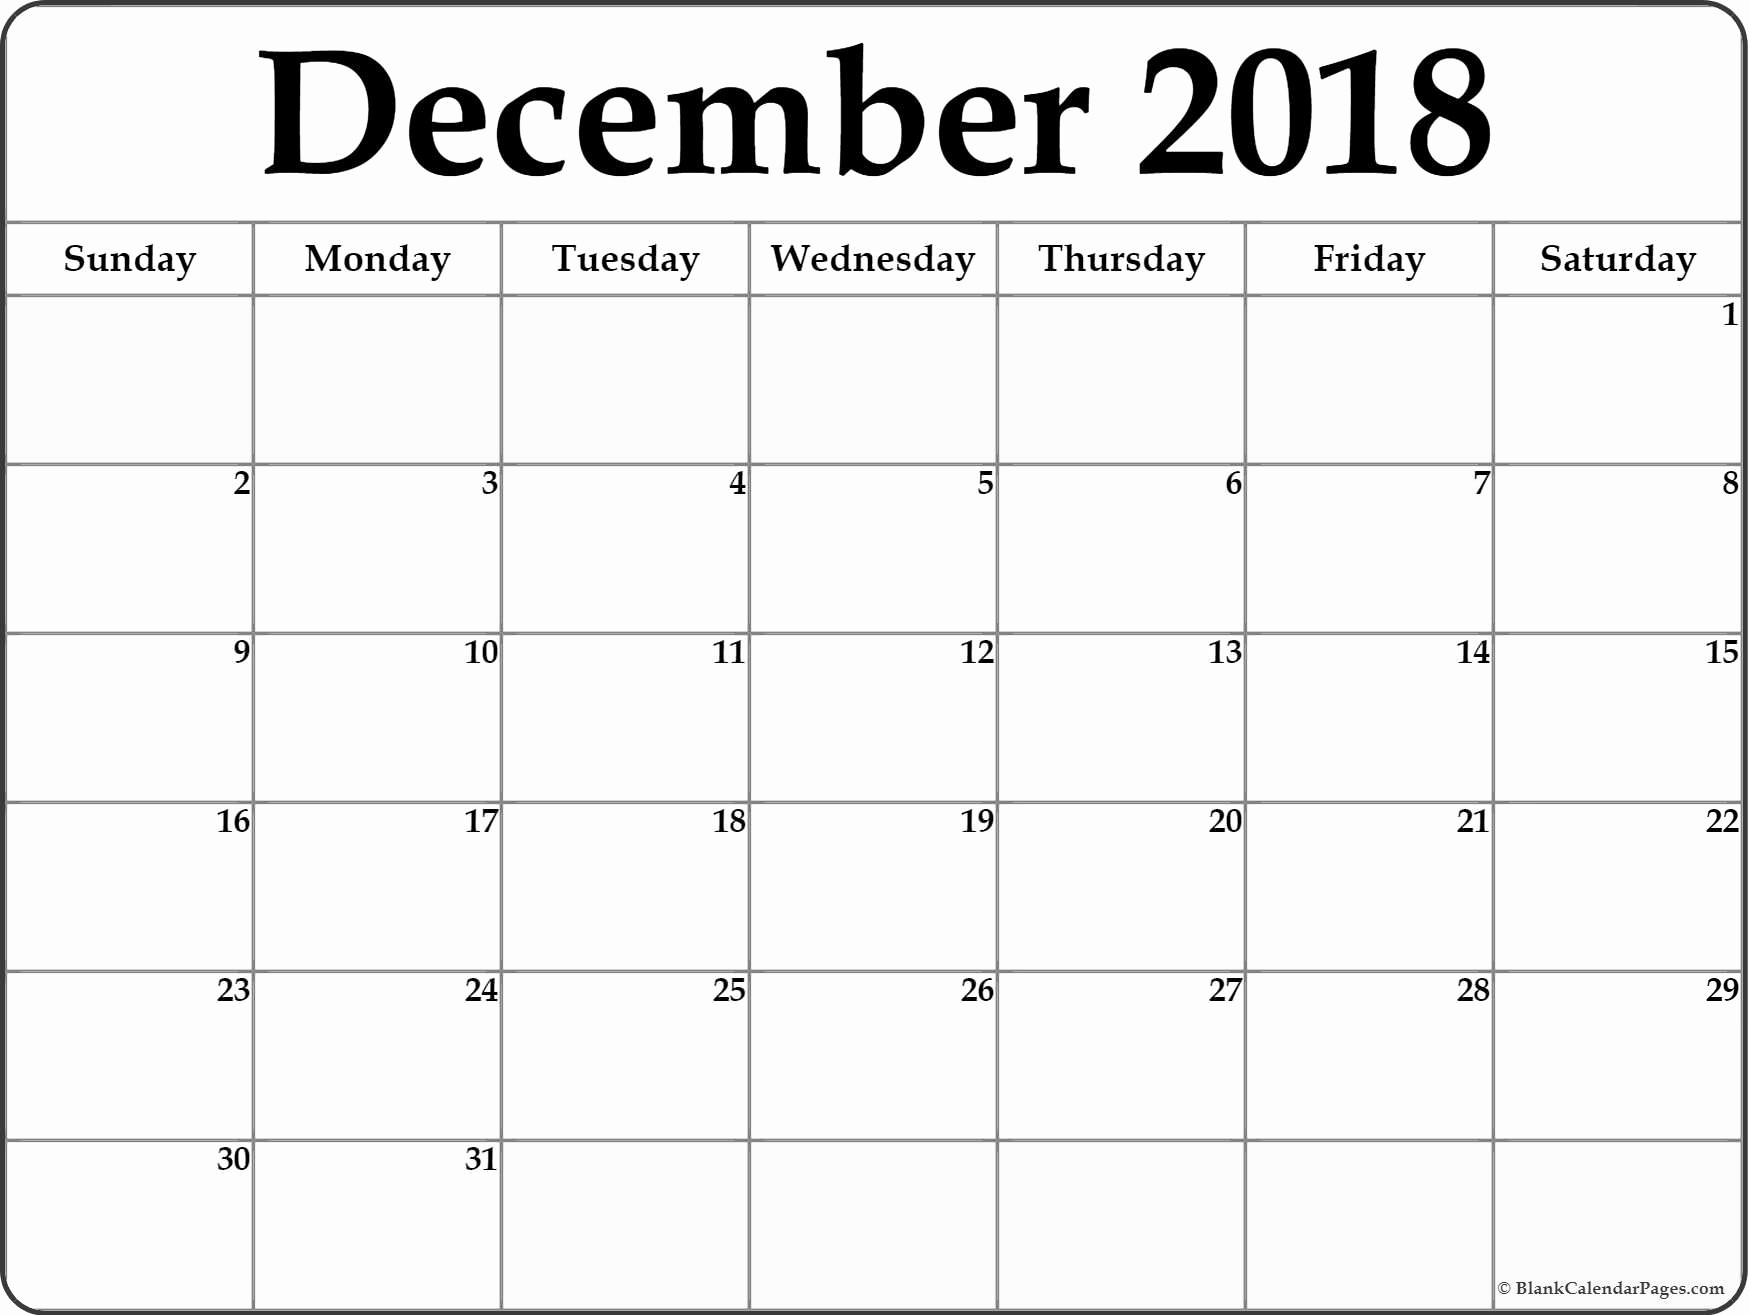 Blank Calendar Template December 2018 Elegant December 2018 Blank Calendar Collection